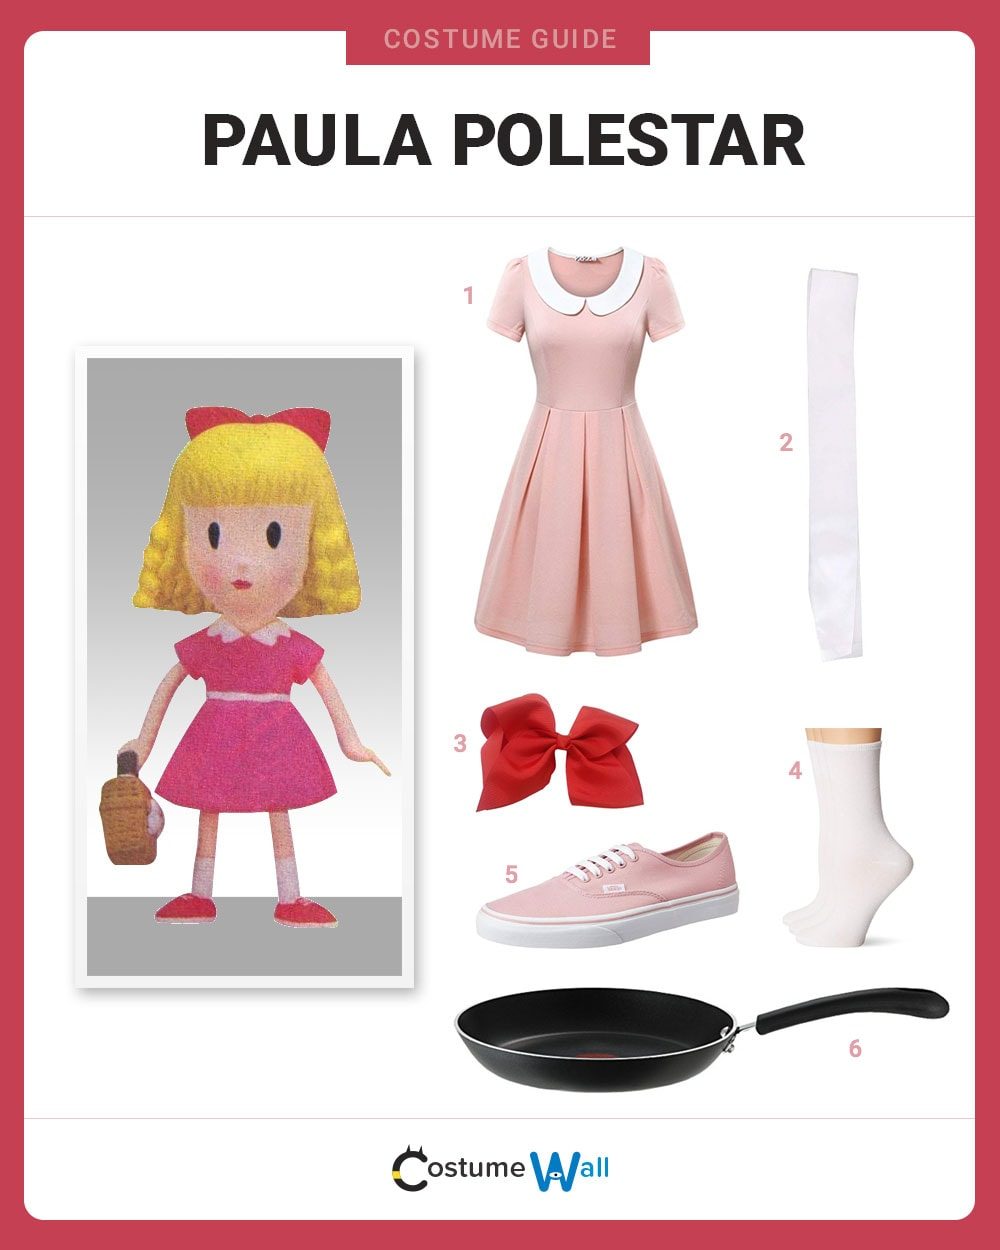 Paula Polestar Costume Guide